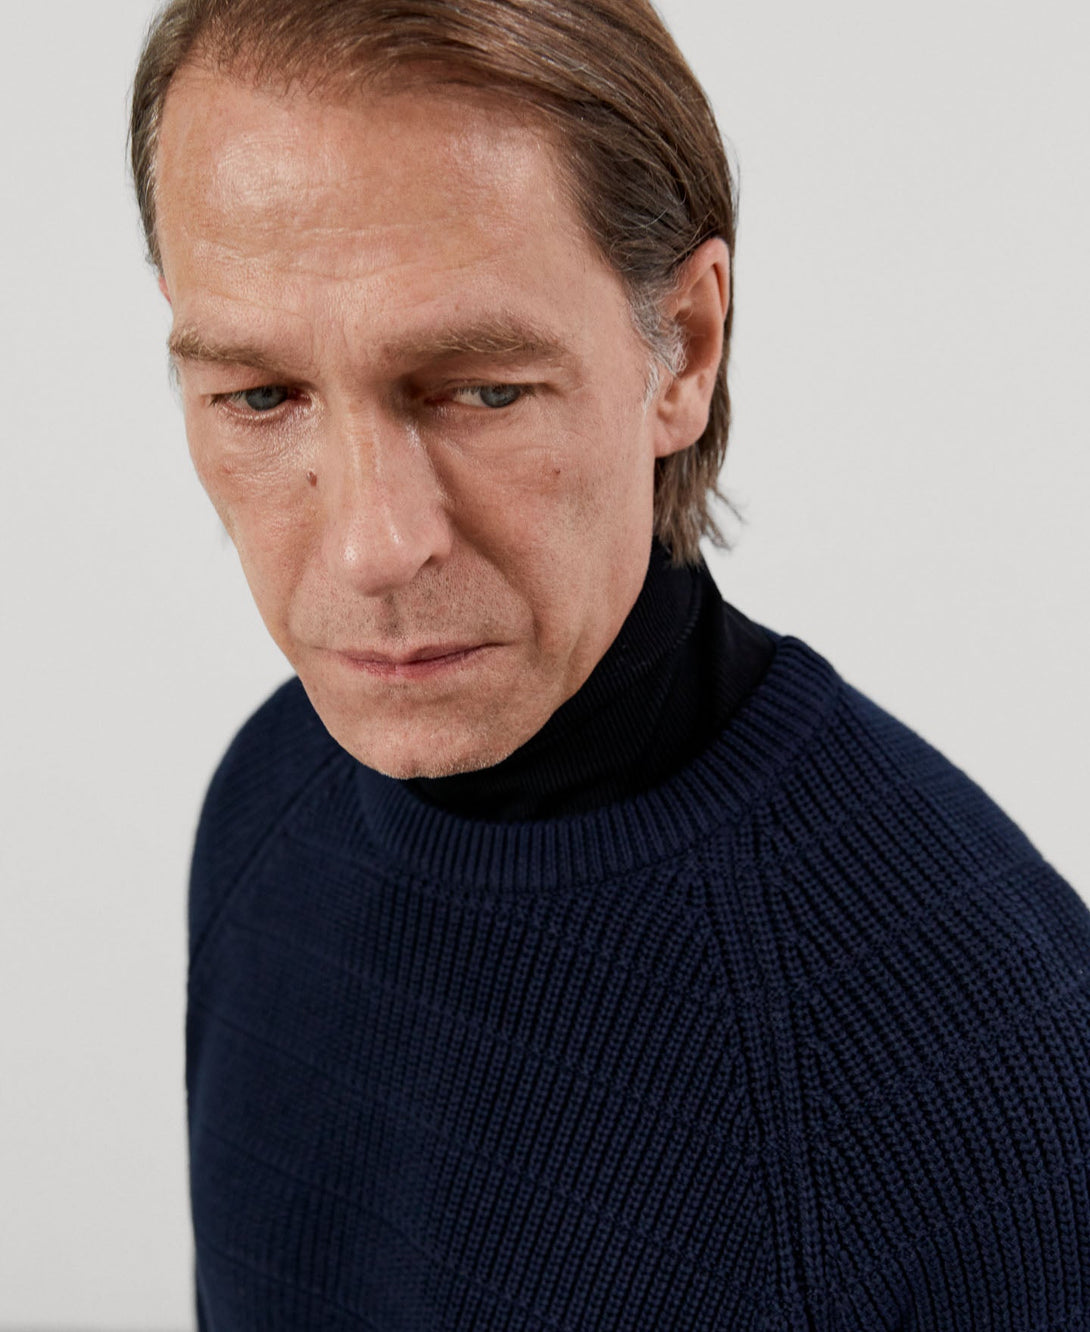 Men Jersey | Blue/Grey Sweater by Spanish designer Adolfo Dominguez